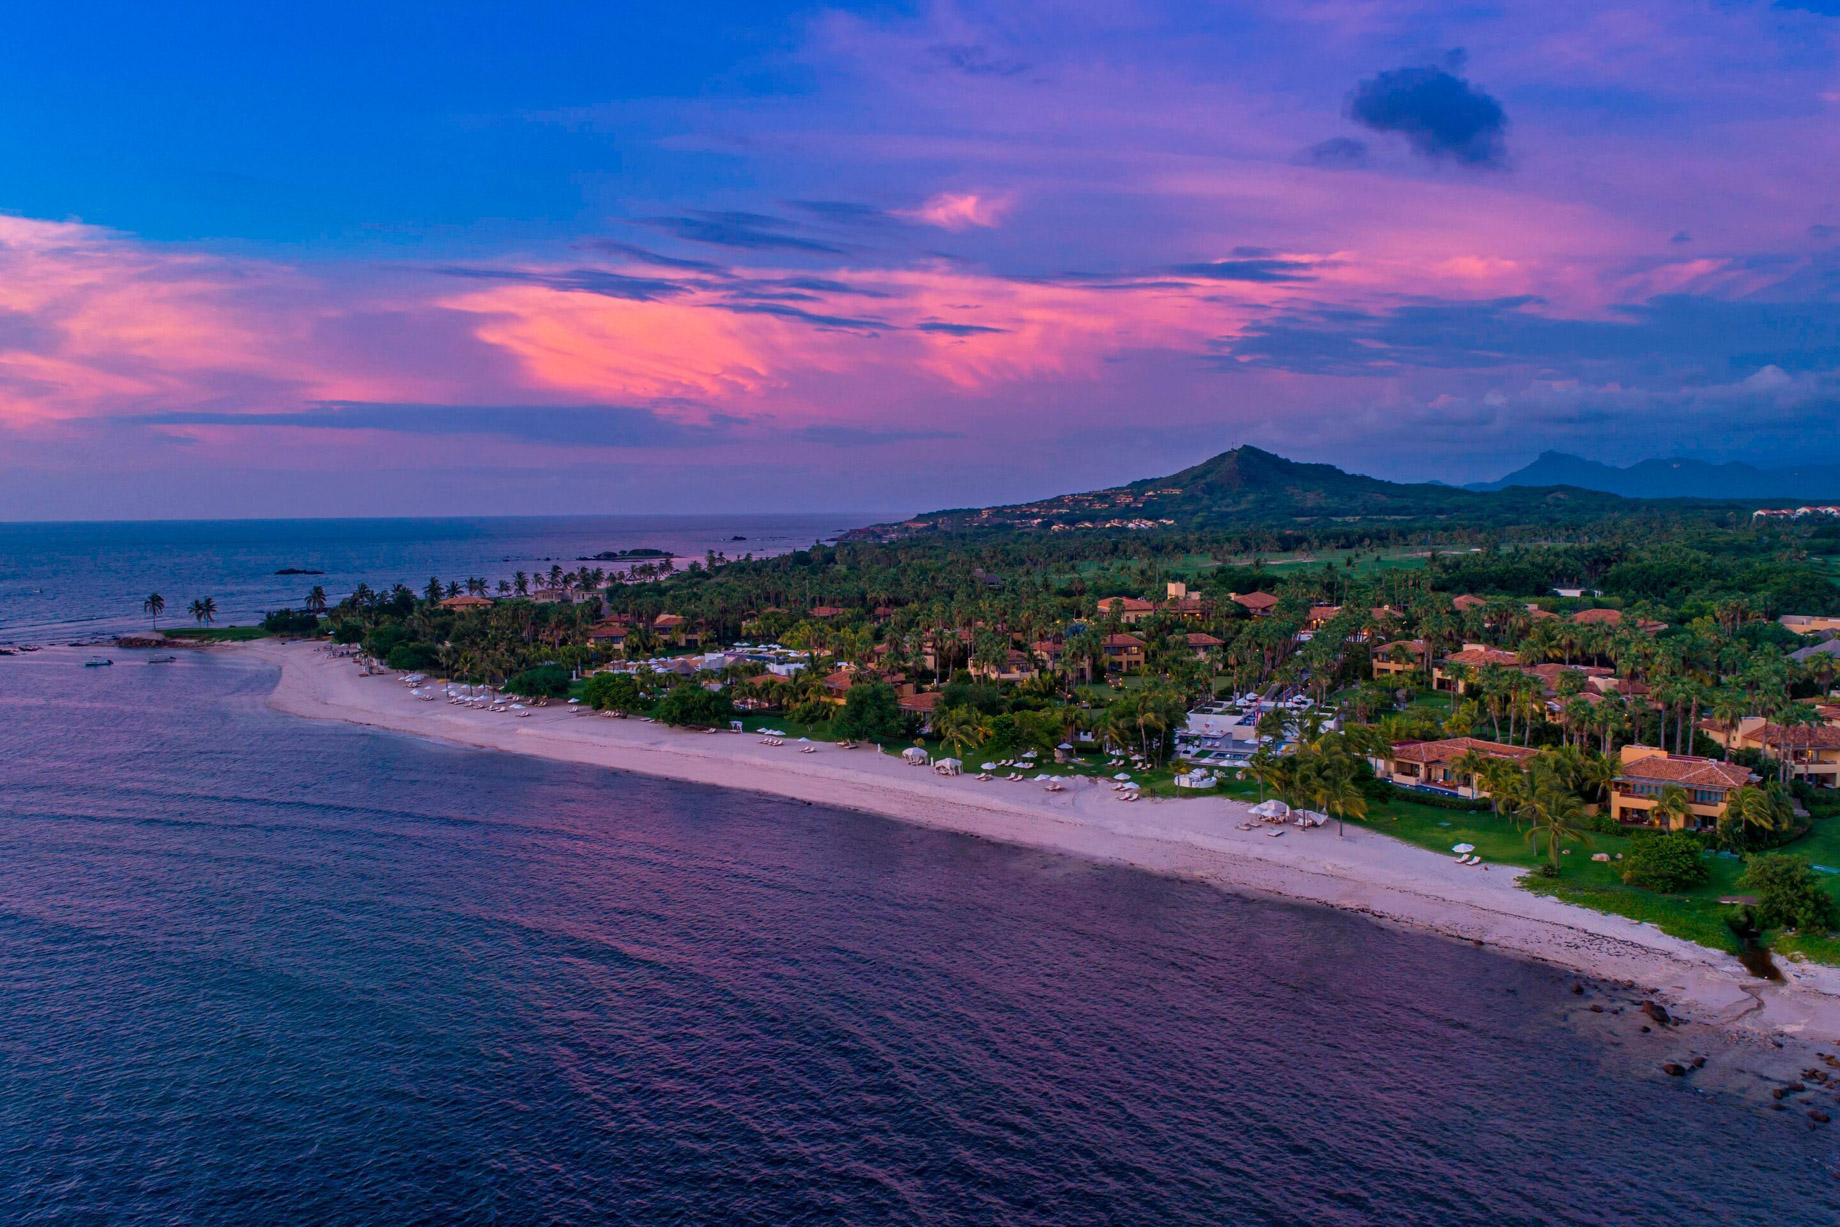 The St. Regis Punta Mita Resort - Nayarit, Mexico - Resort Aerial View Sunset